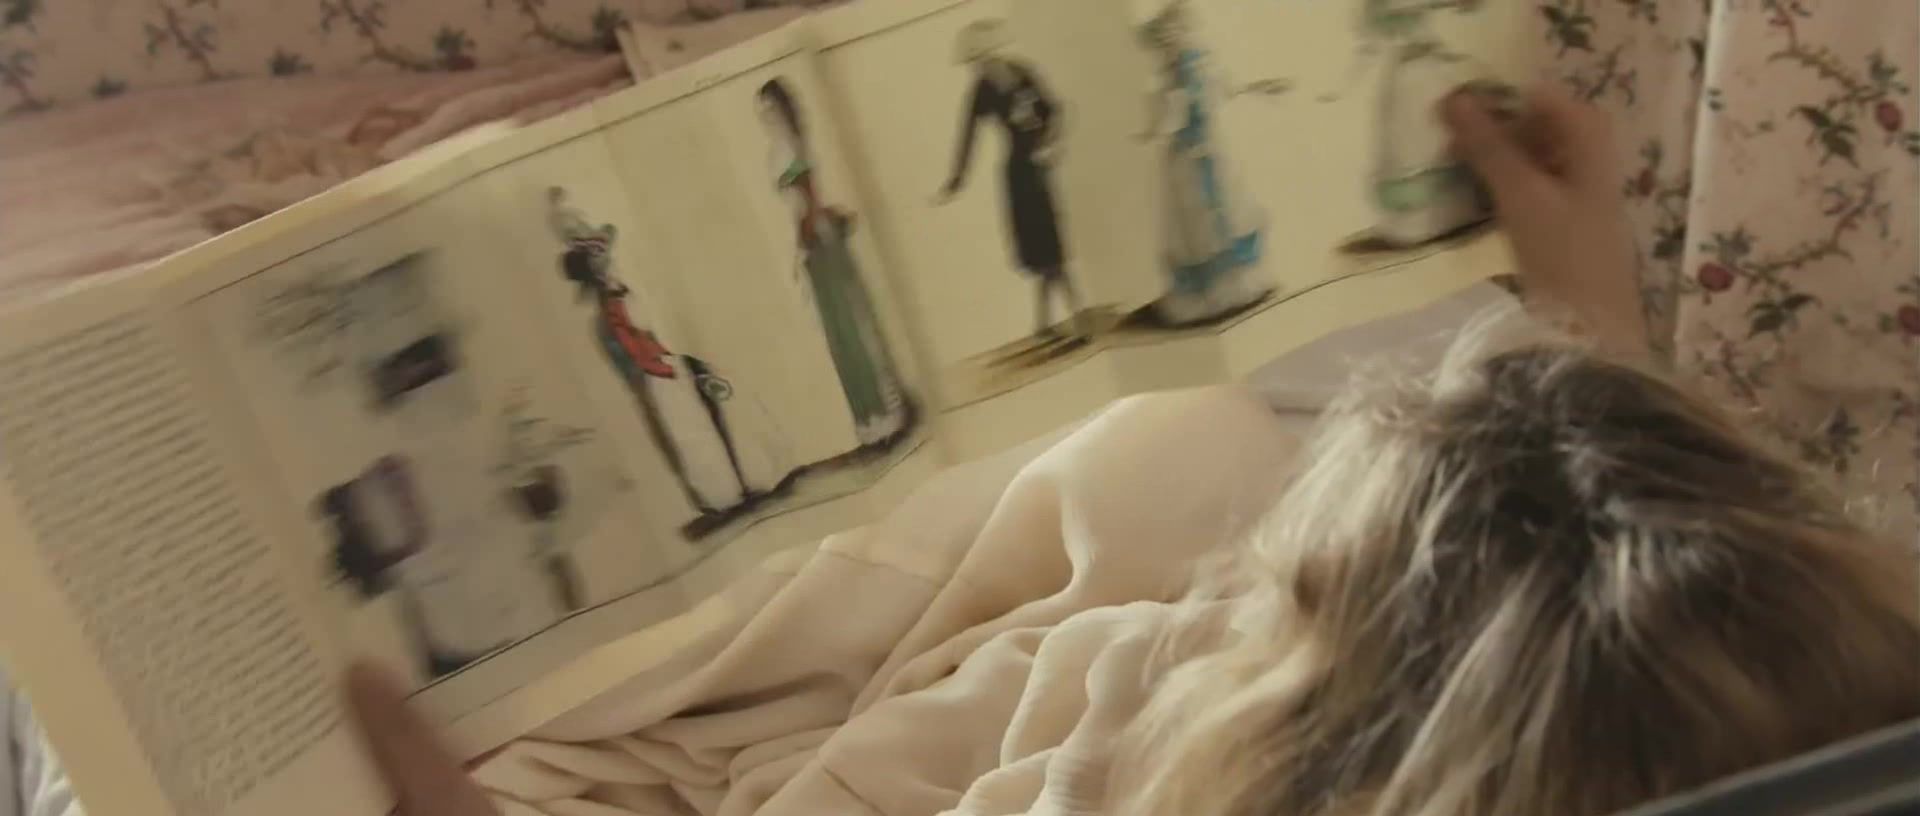 Striptease Virginie Ledoyen - Farewell My Queen (2012) Virgin - 1